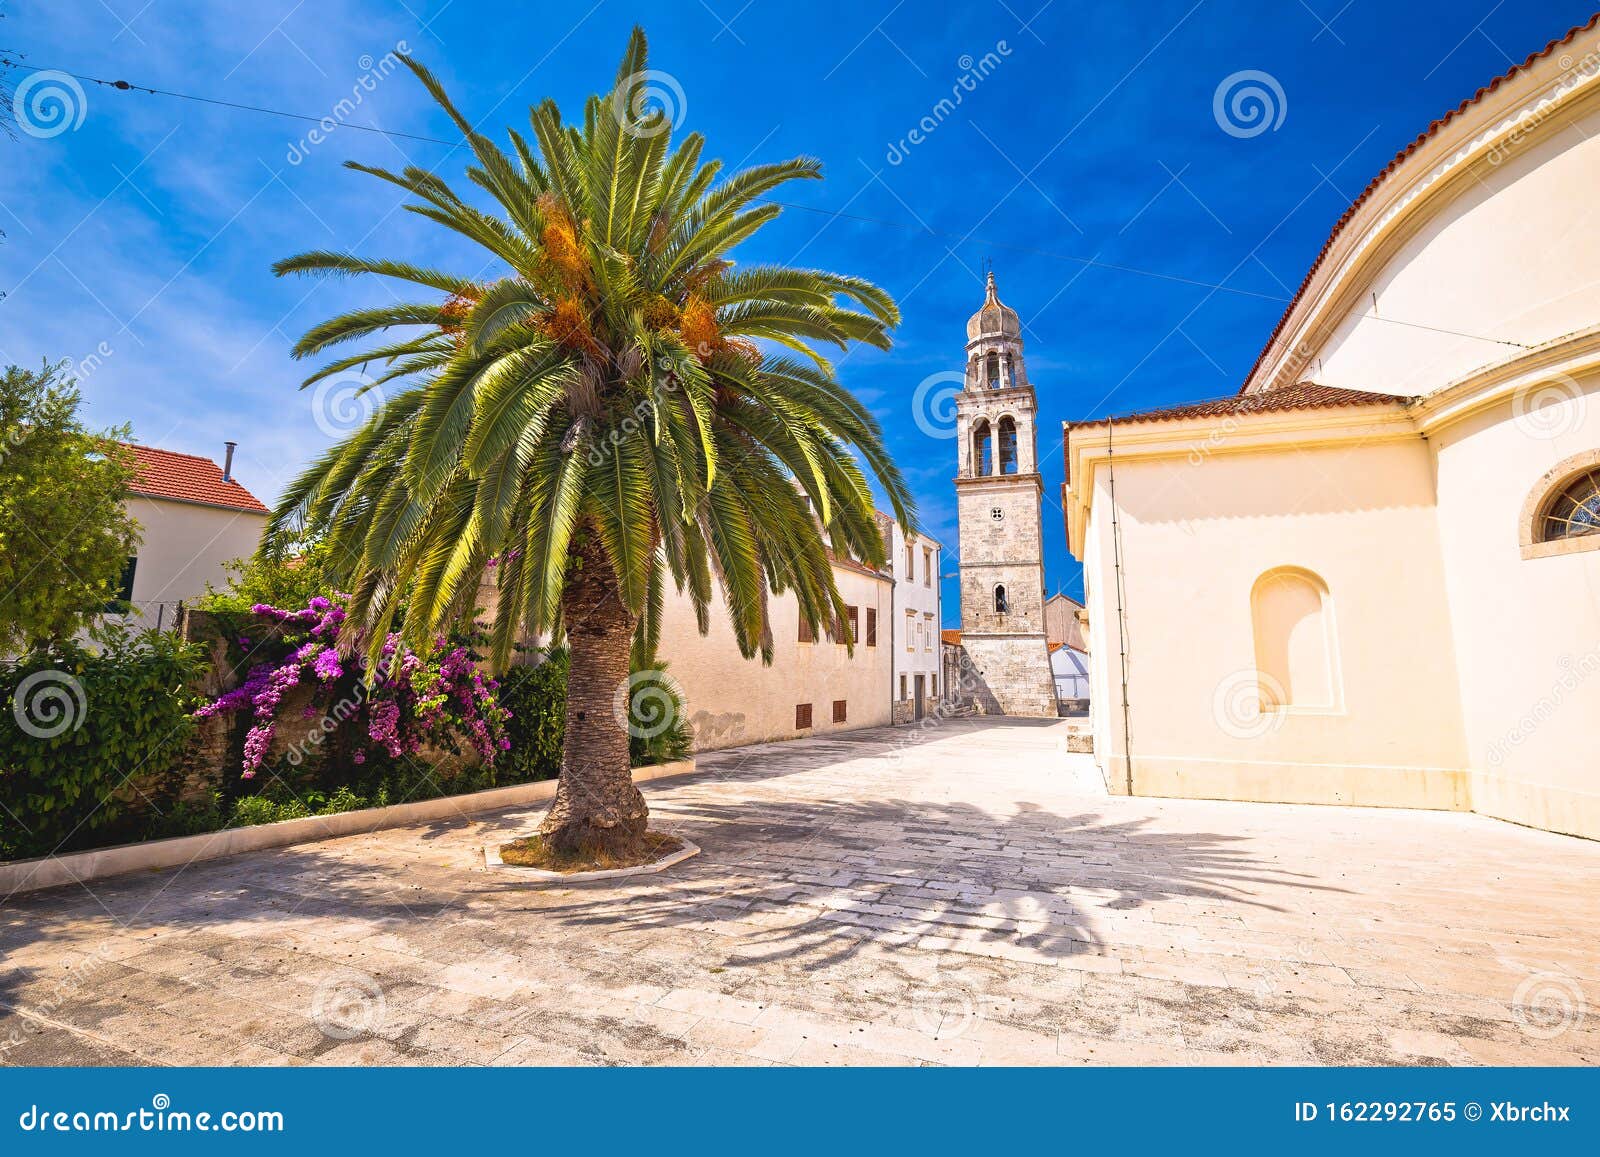 vela luka: town of vela luka on korcula island church and old stone square view